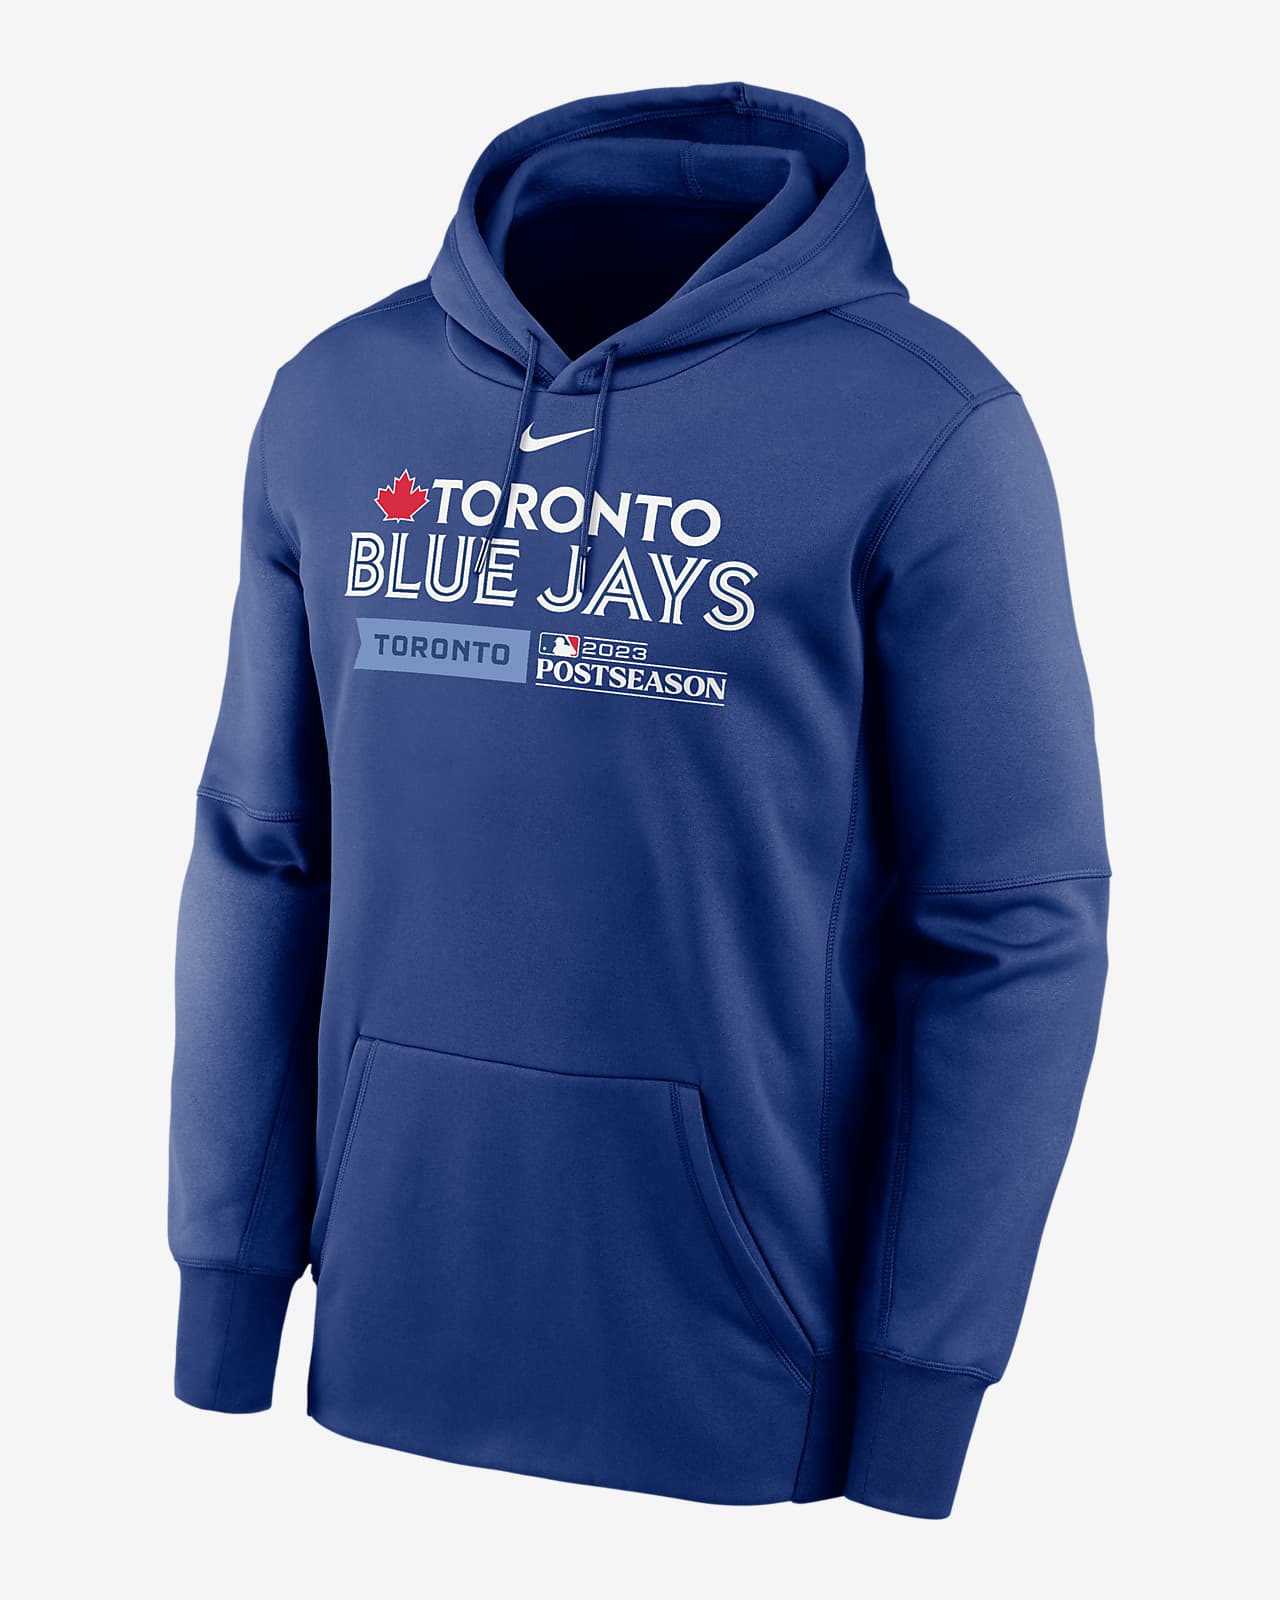 Nike Toronto Blue Jays 2023 Postseason Dugout logo shirt, hoodie